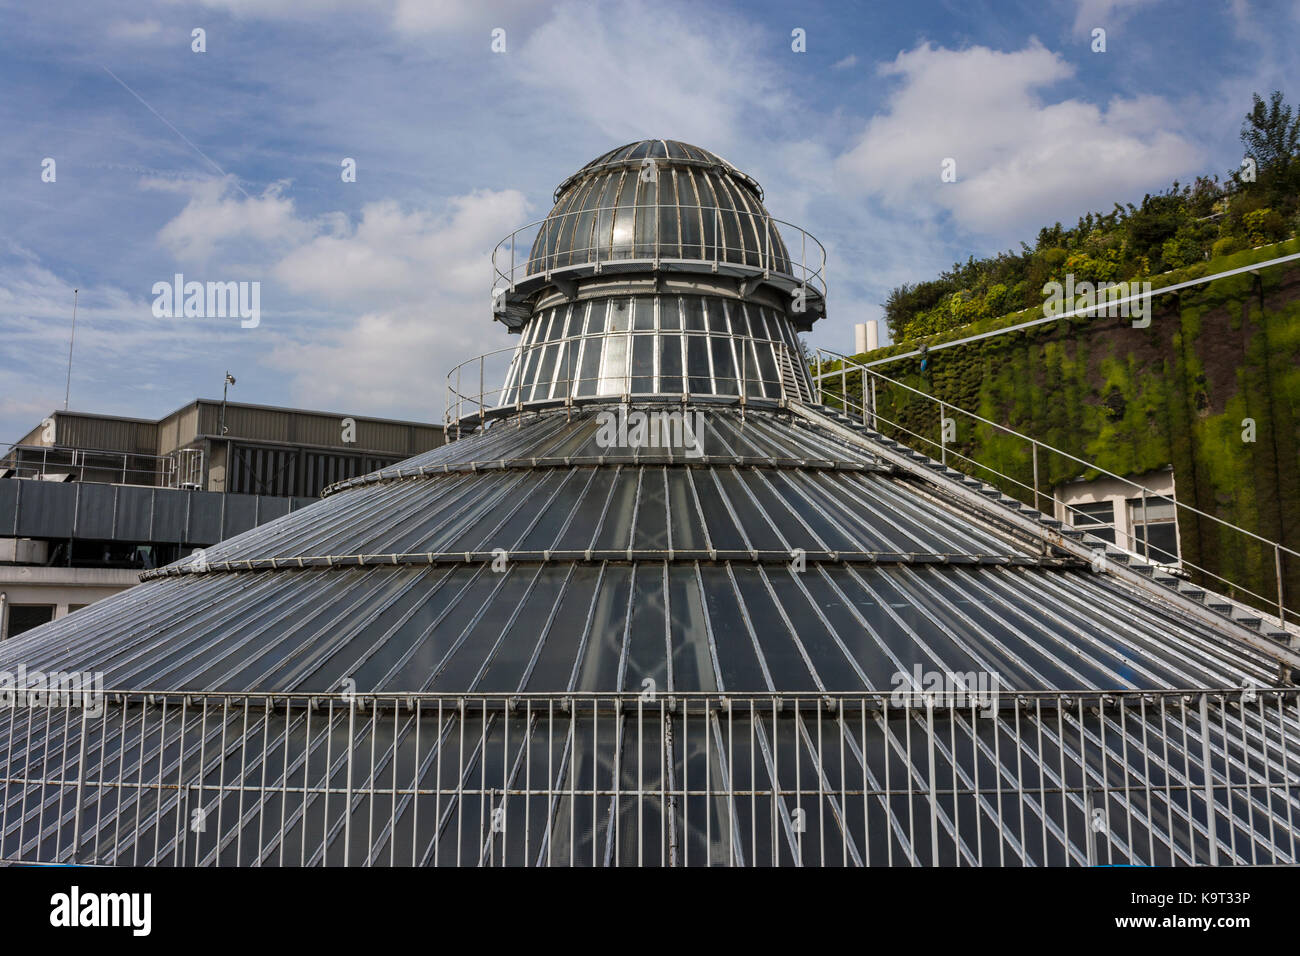 Exterior superior de las Galeries lafayette (grandes almacenes), una cúpula de cristal, París, Francia Foto de stock